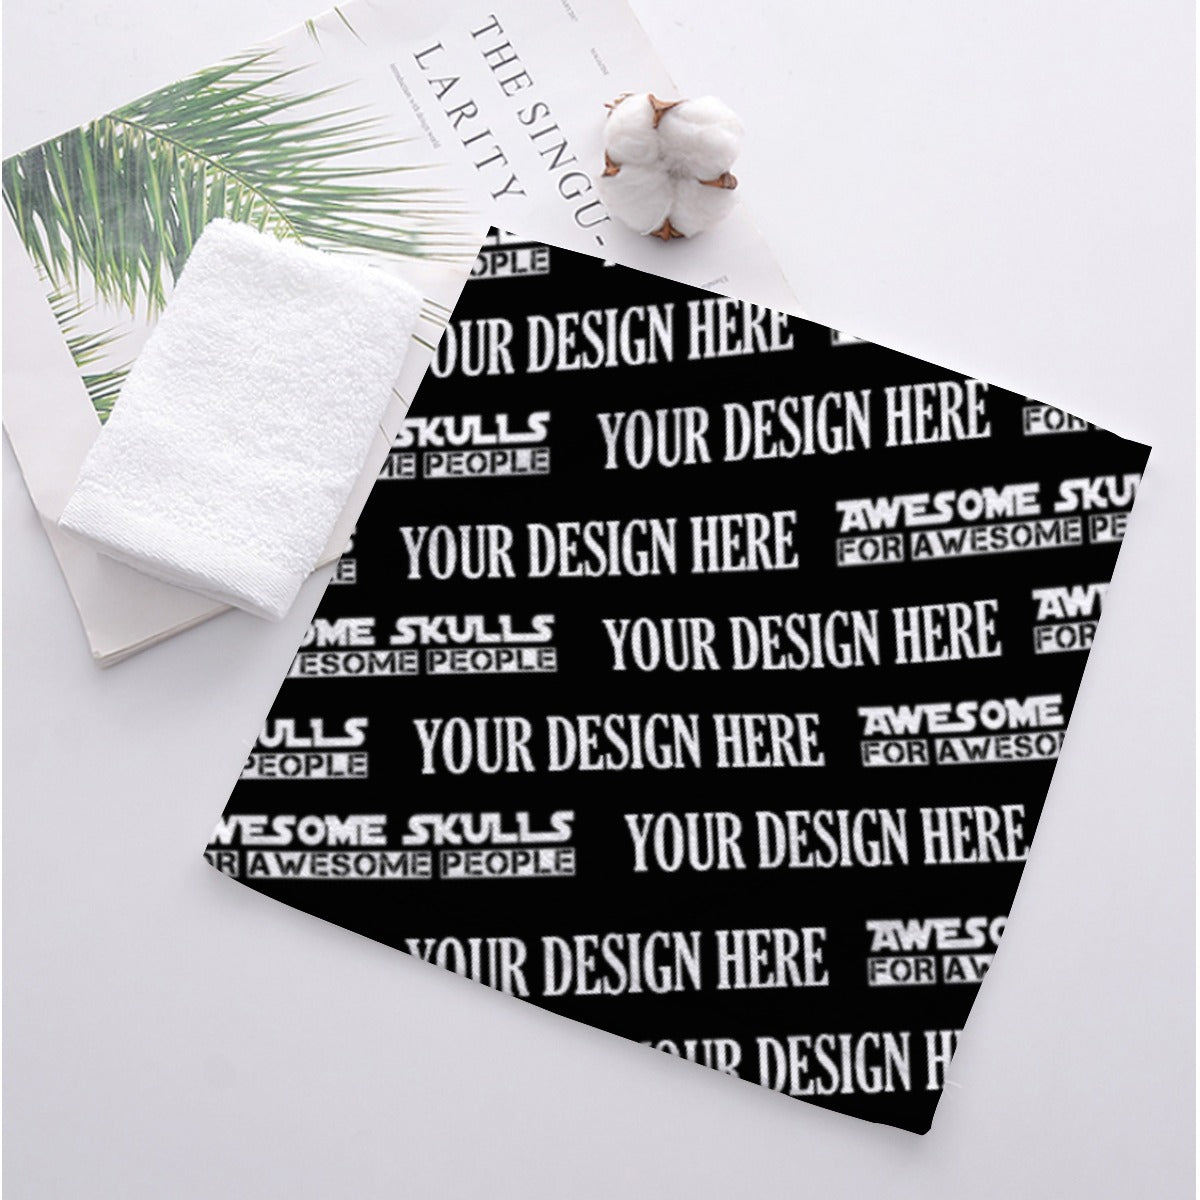 Print on demand custom design Towel